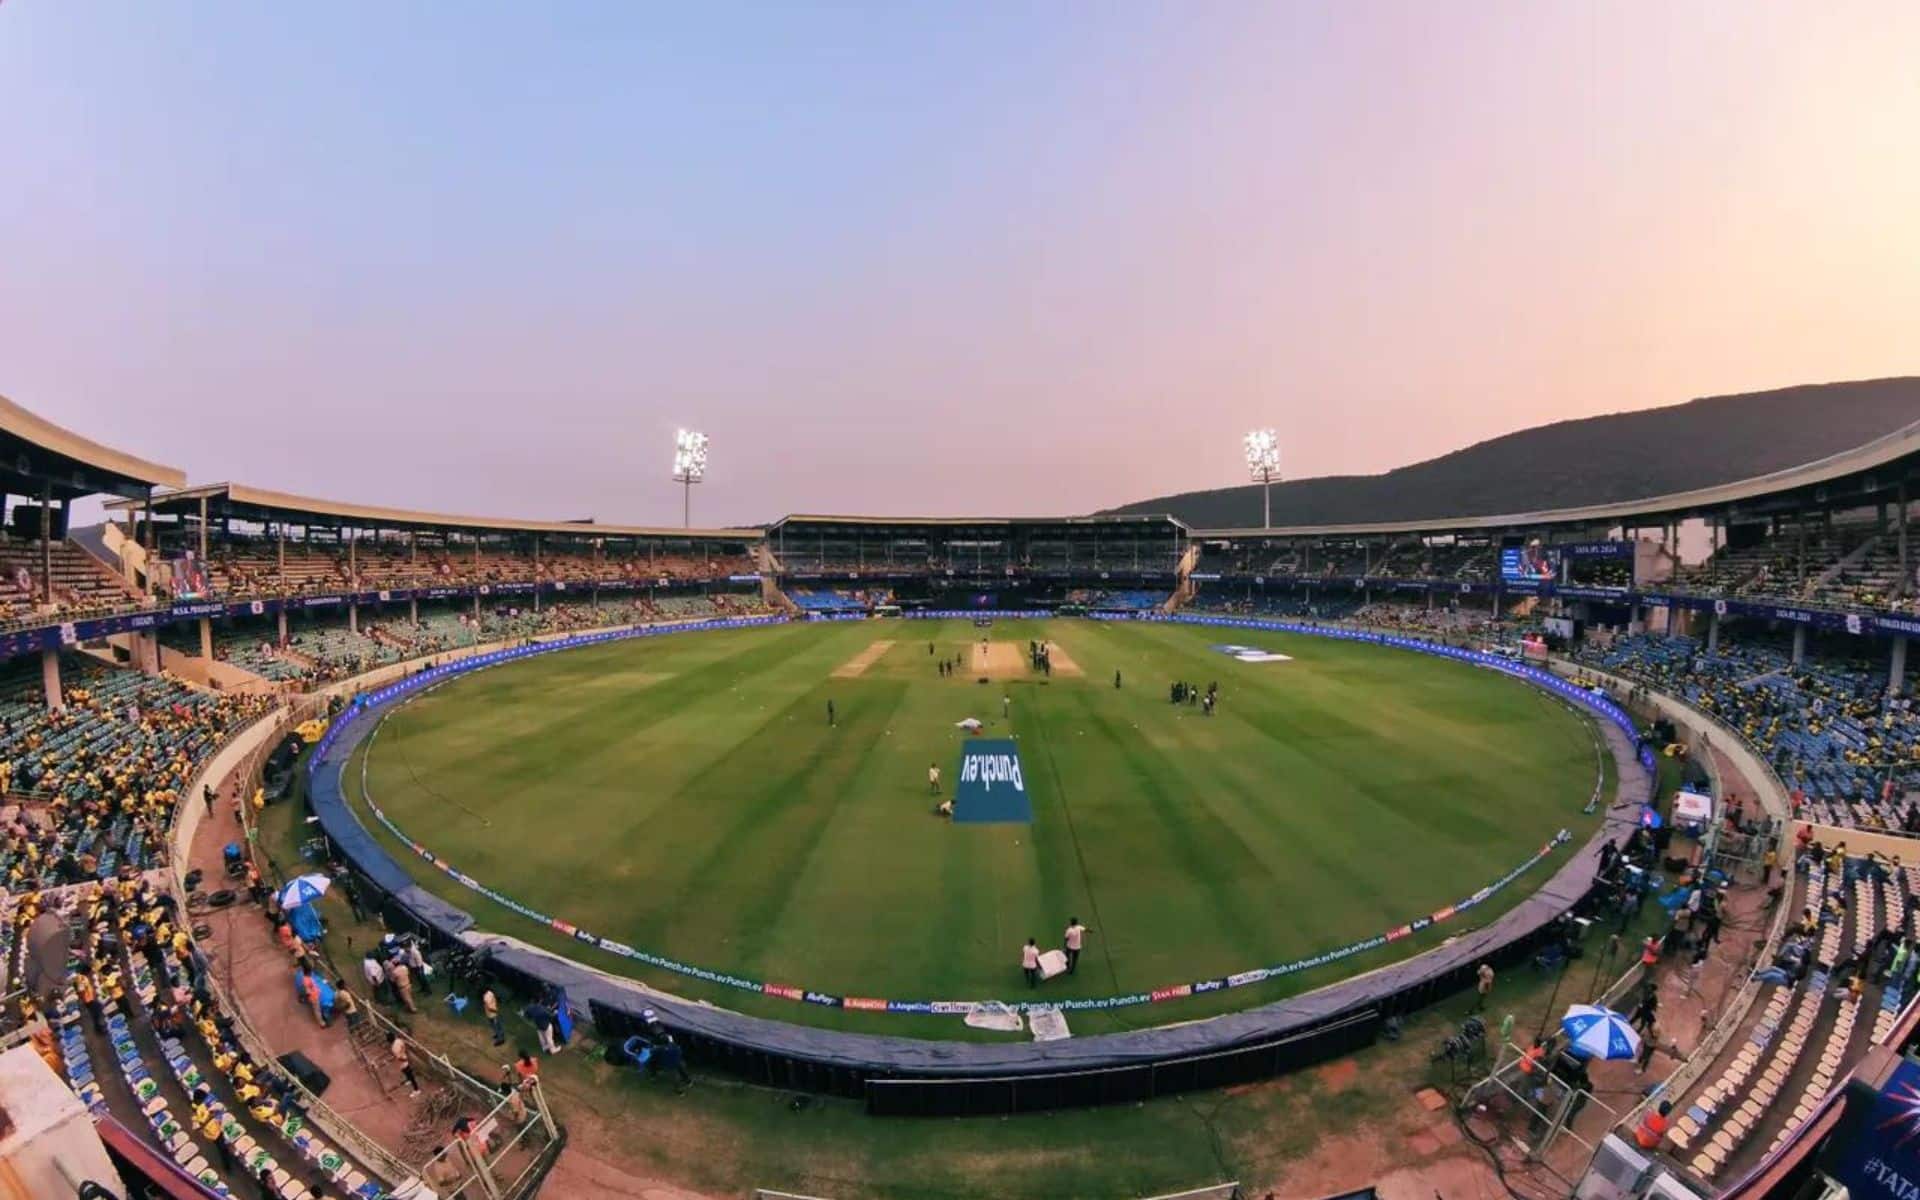 ACA-VDCA International Cricket Stadium [iplt20.com]